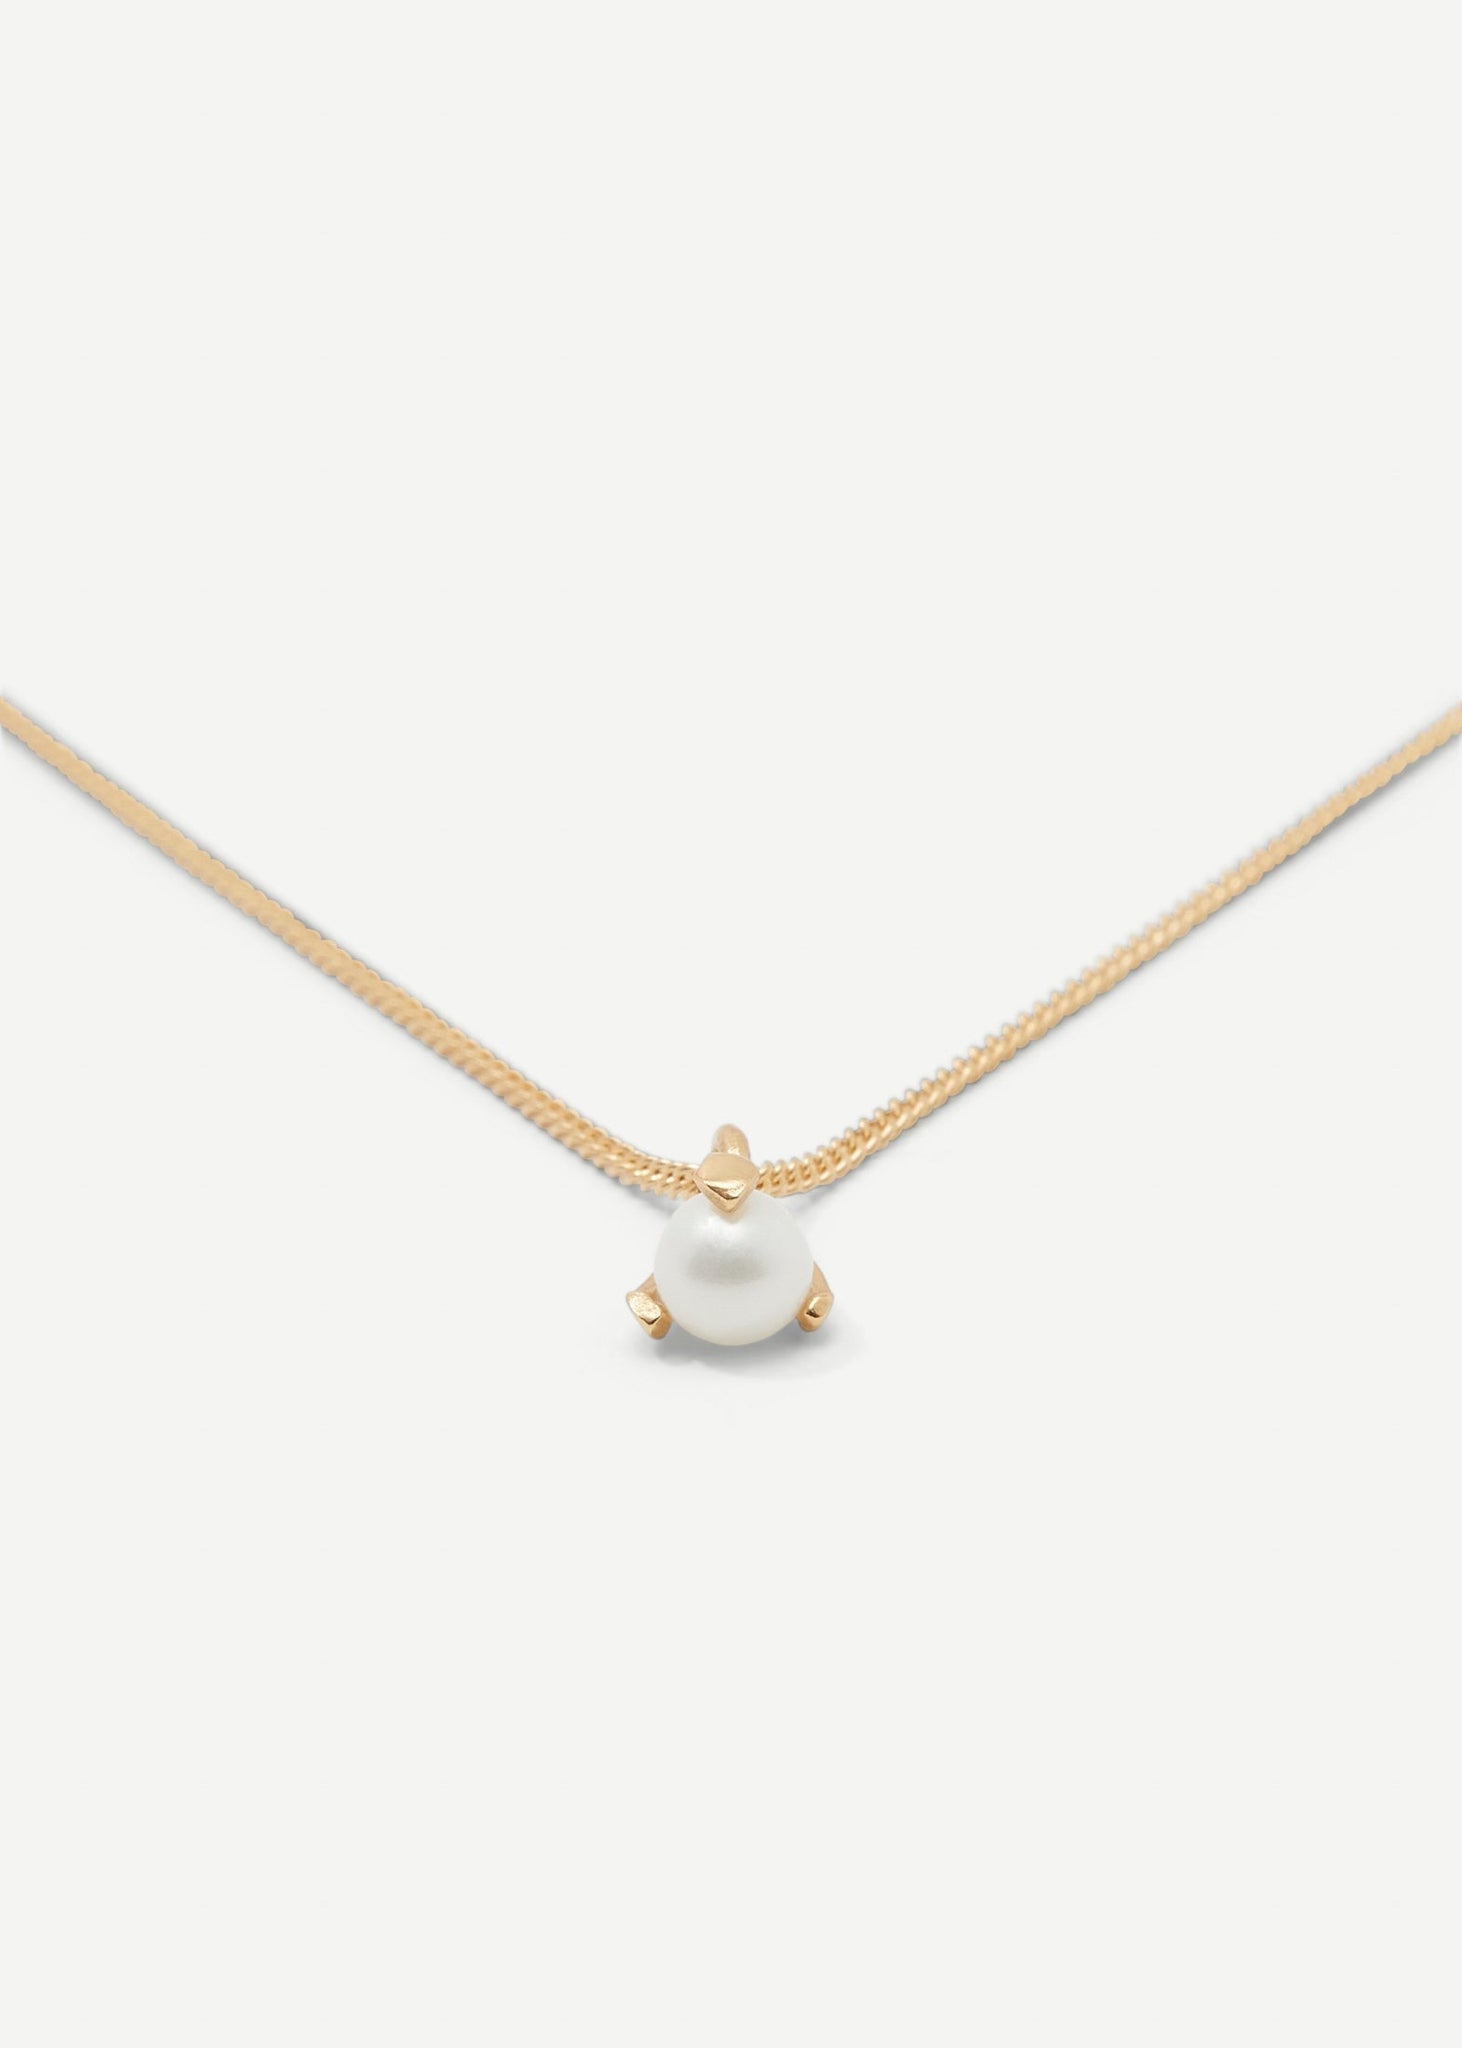 Pearled Necklace S - Cornelia Webb - 3